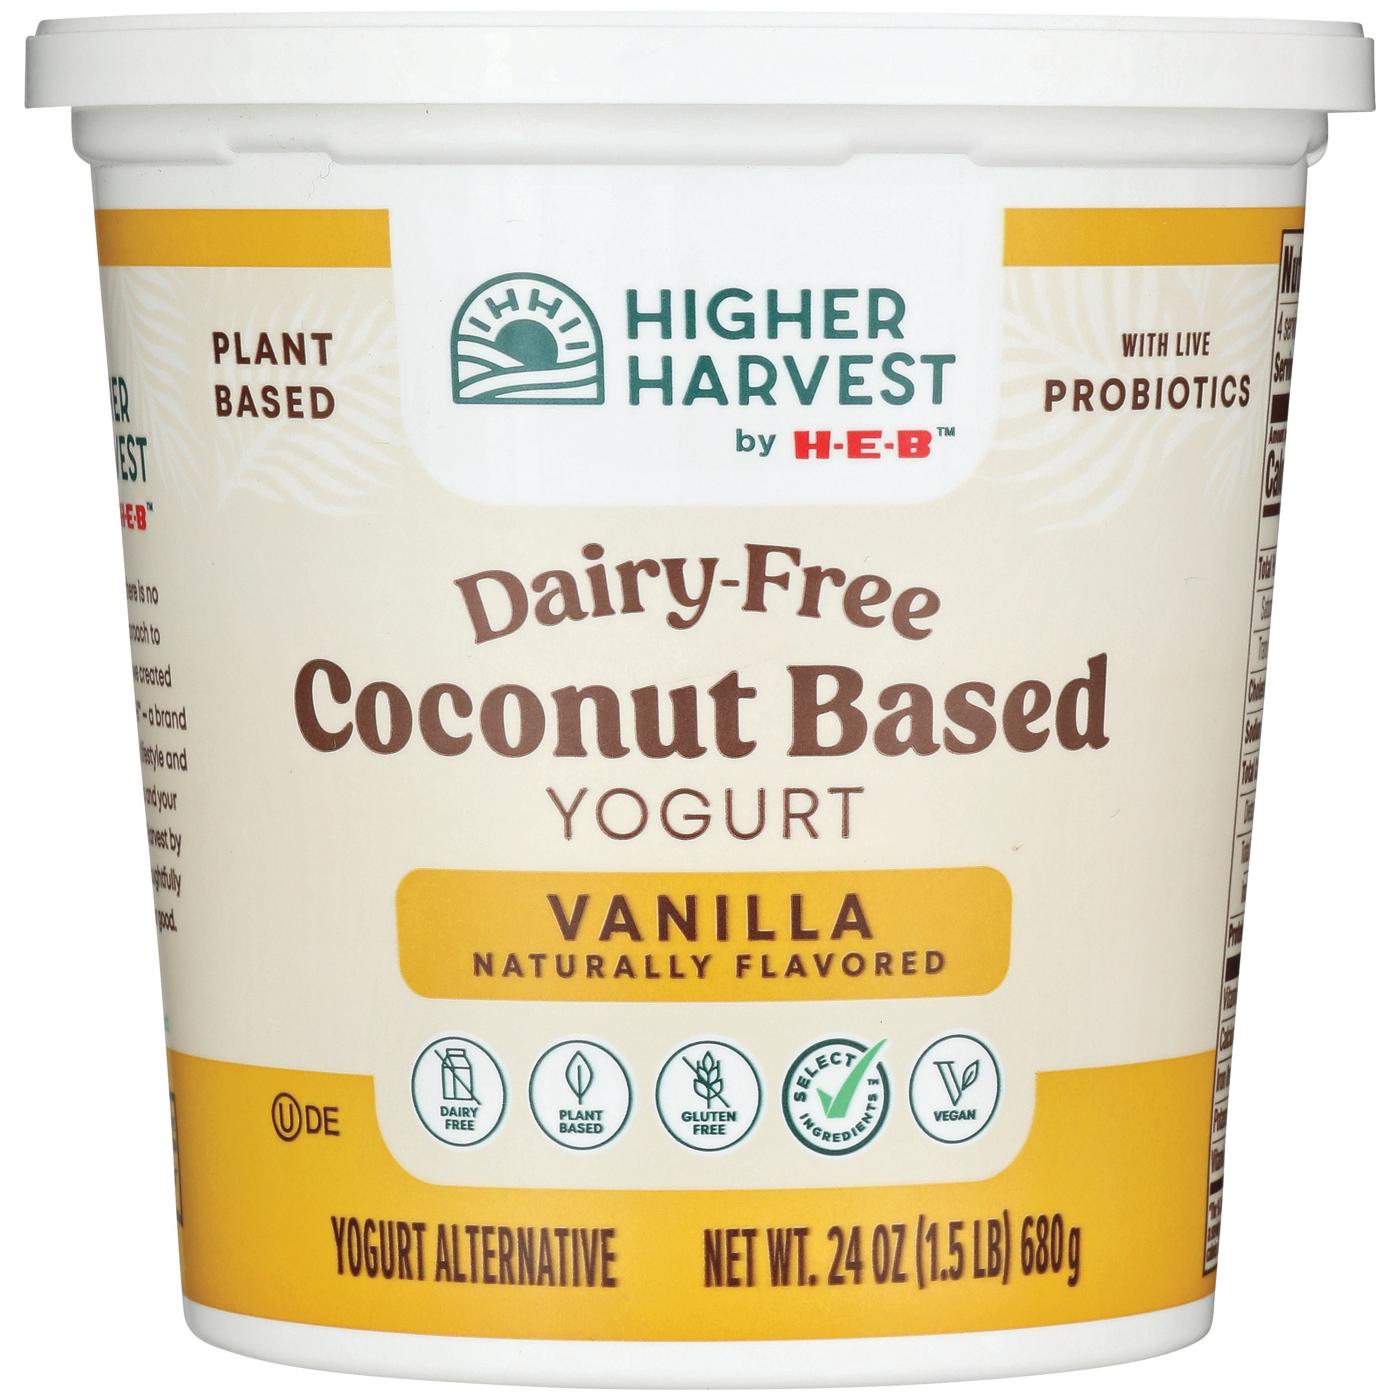 Higher Harvest by H-E-B Dairy-Free Coconut-Based Yogurt – Vanilla; image 1 of 2